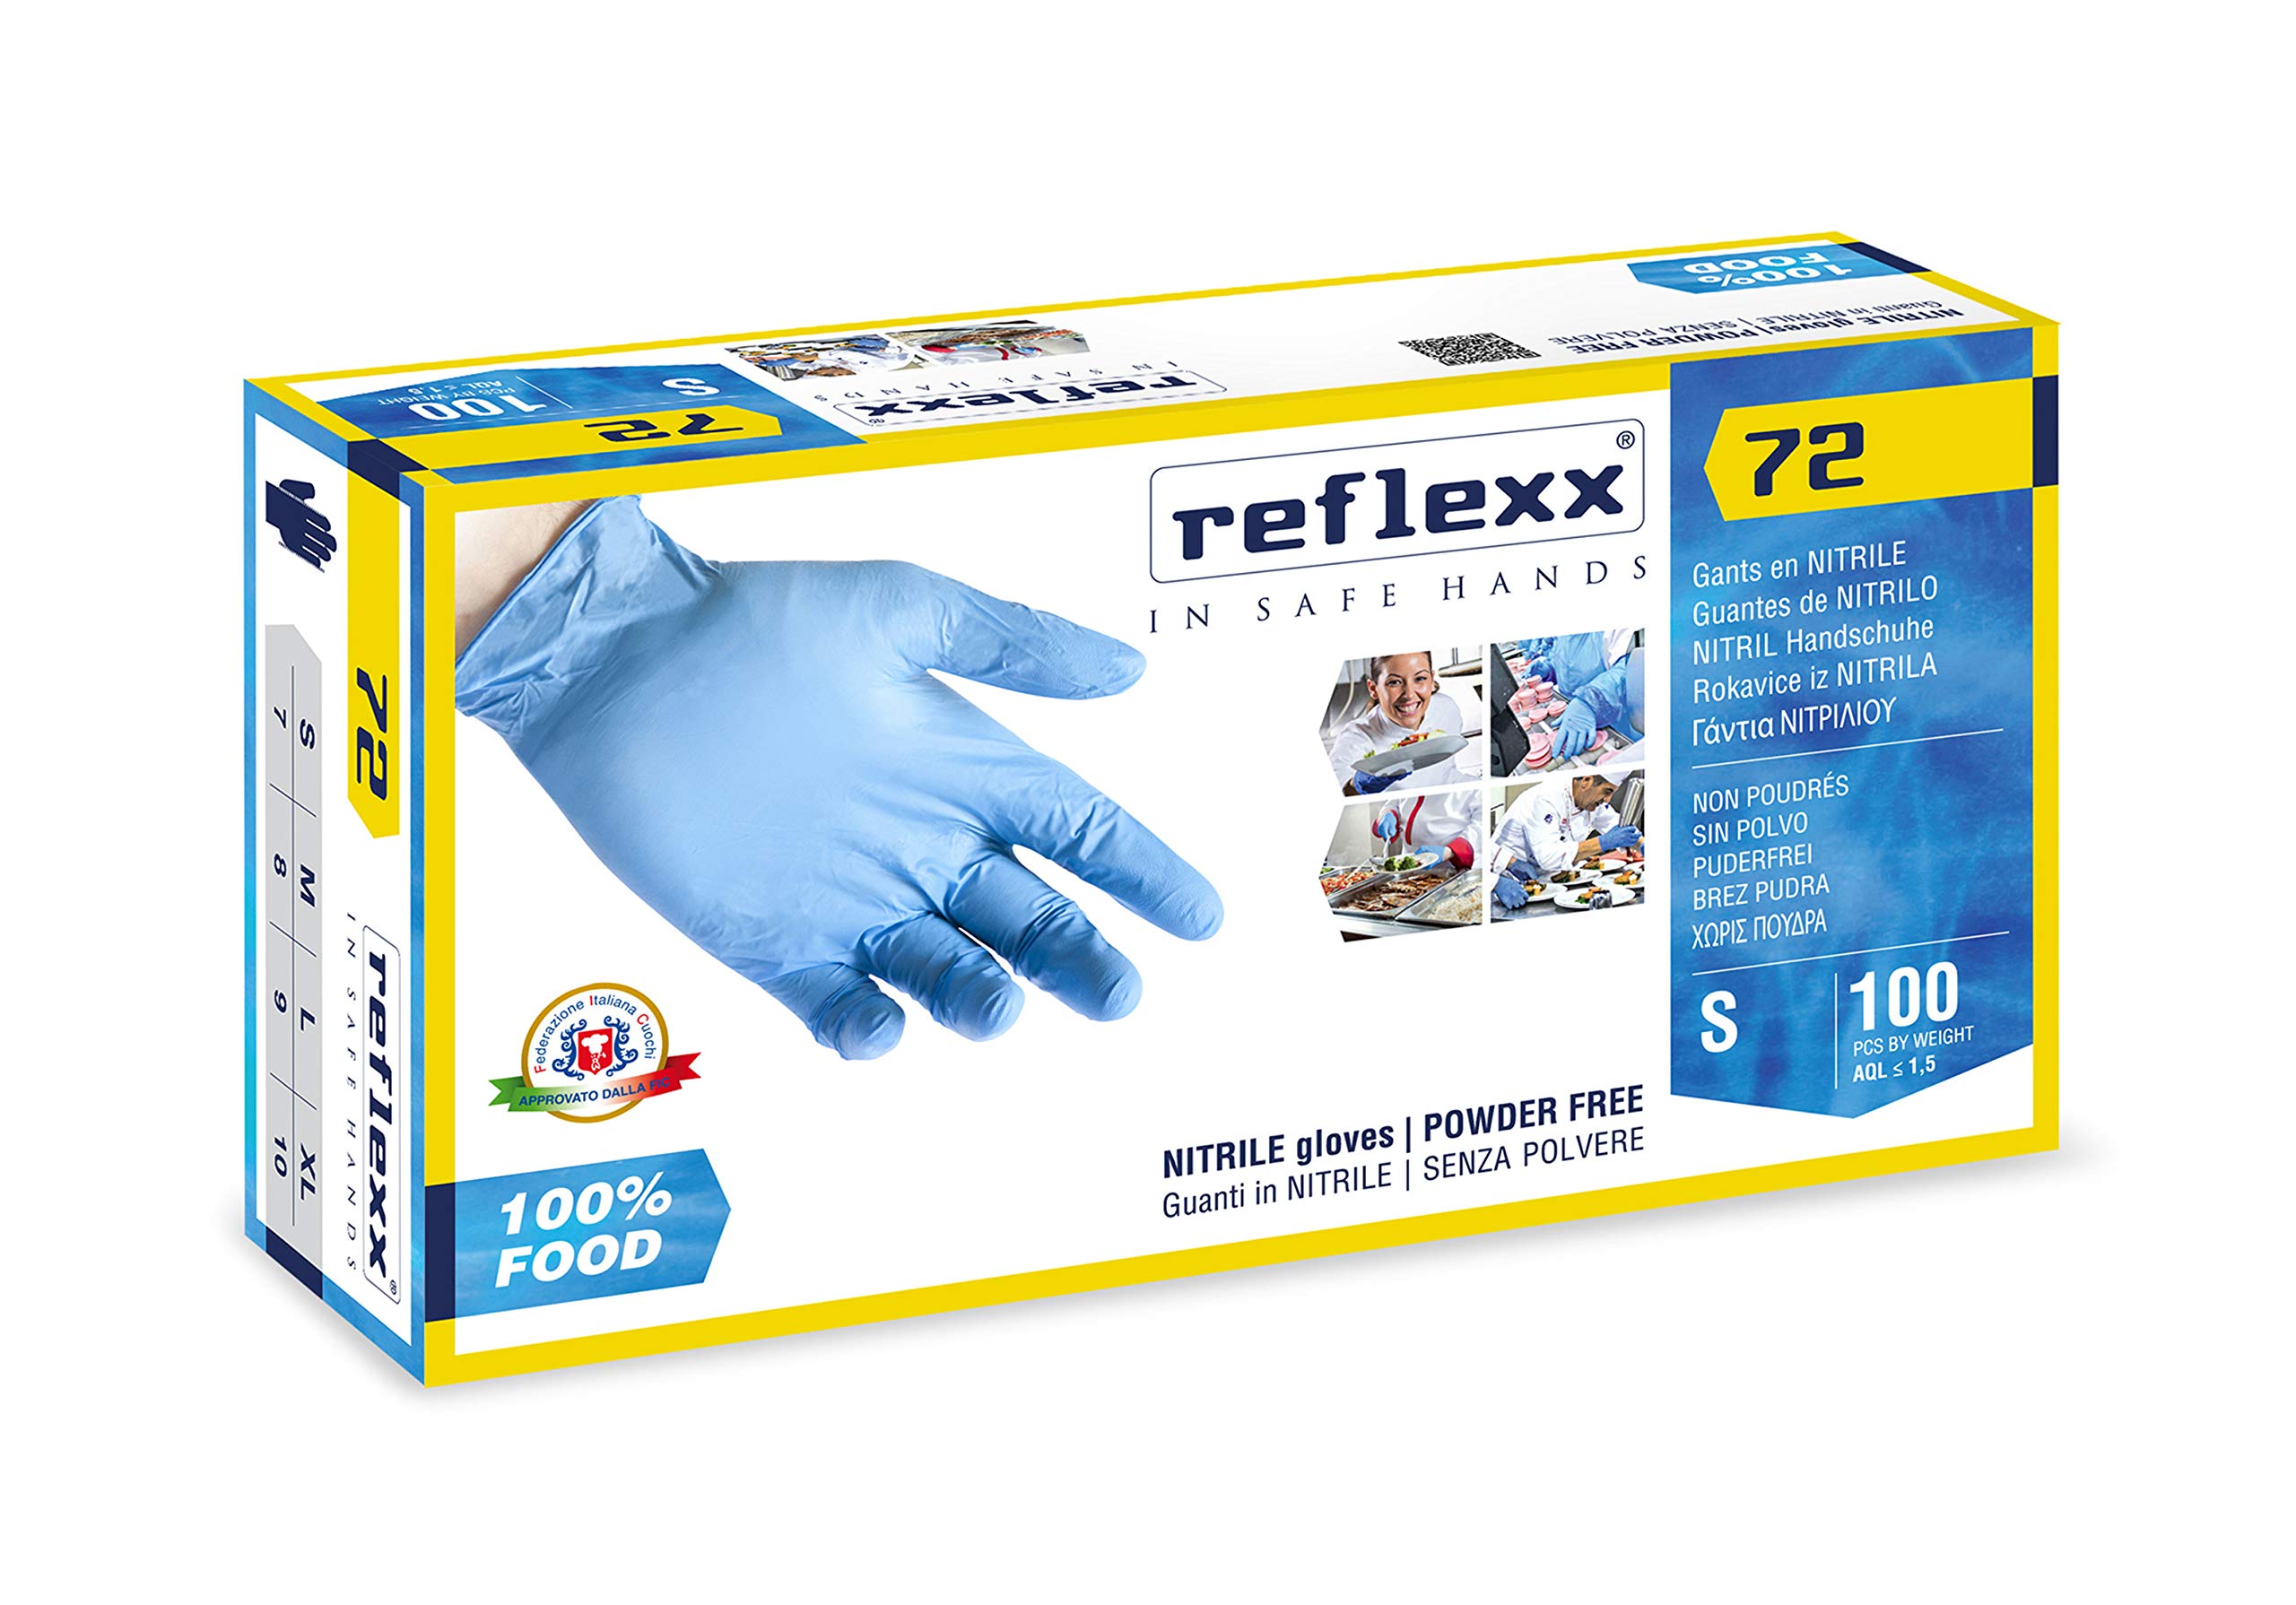 Guanti in nitrile foodline R72 - tg M - azzurro - Reflexx - conf. 100 pezzi